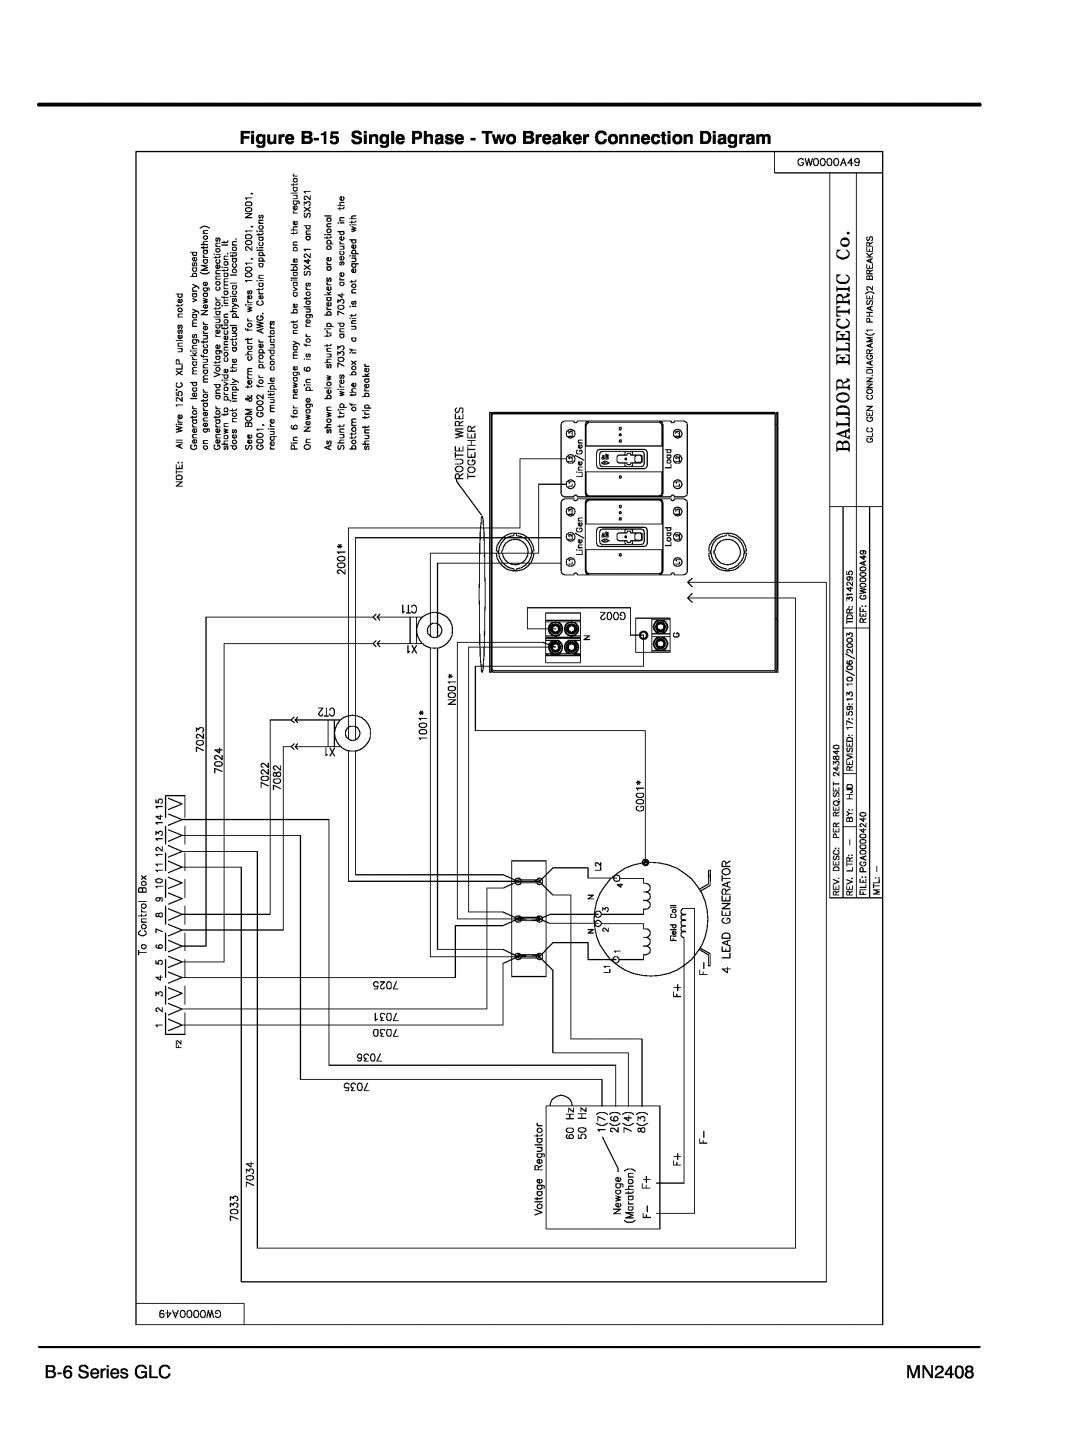 Baldor GLC30, GLC60, GLC105, GLC45 manual Figure B‐15 Single Phase - Two Breaker Connection Diagram, B‐6 Series GLC, MN2408 